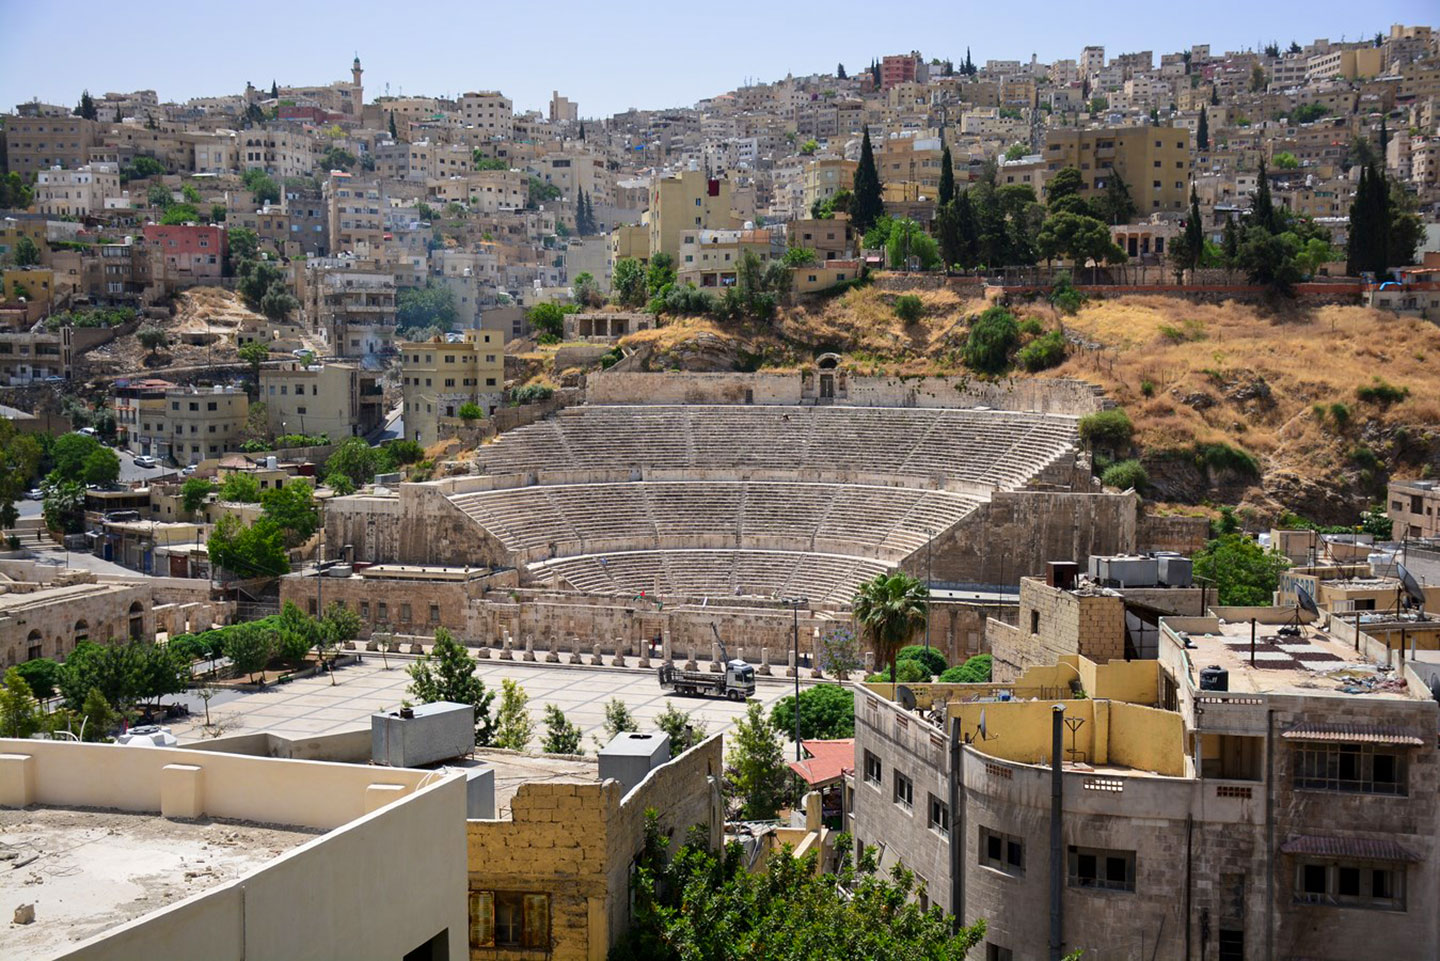 The Roman theater in Amman, the capital city of Jordan